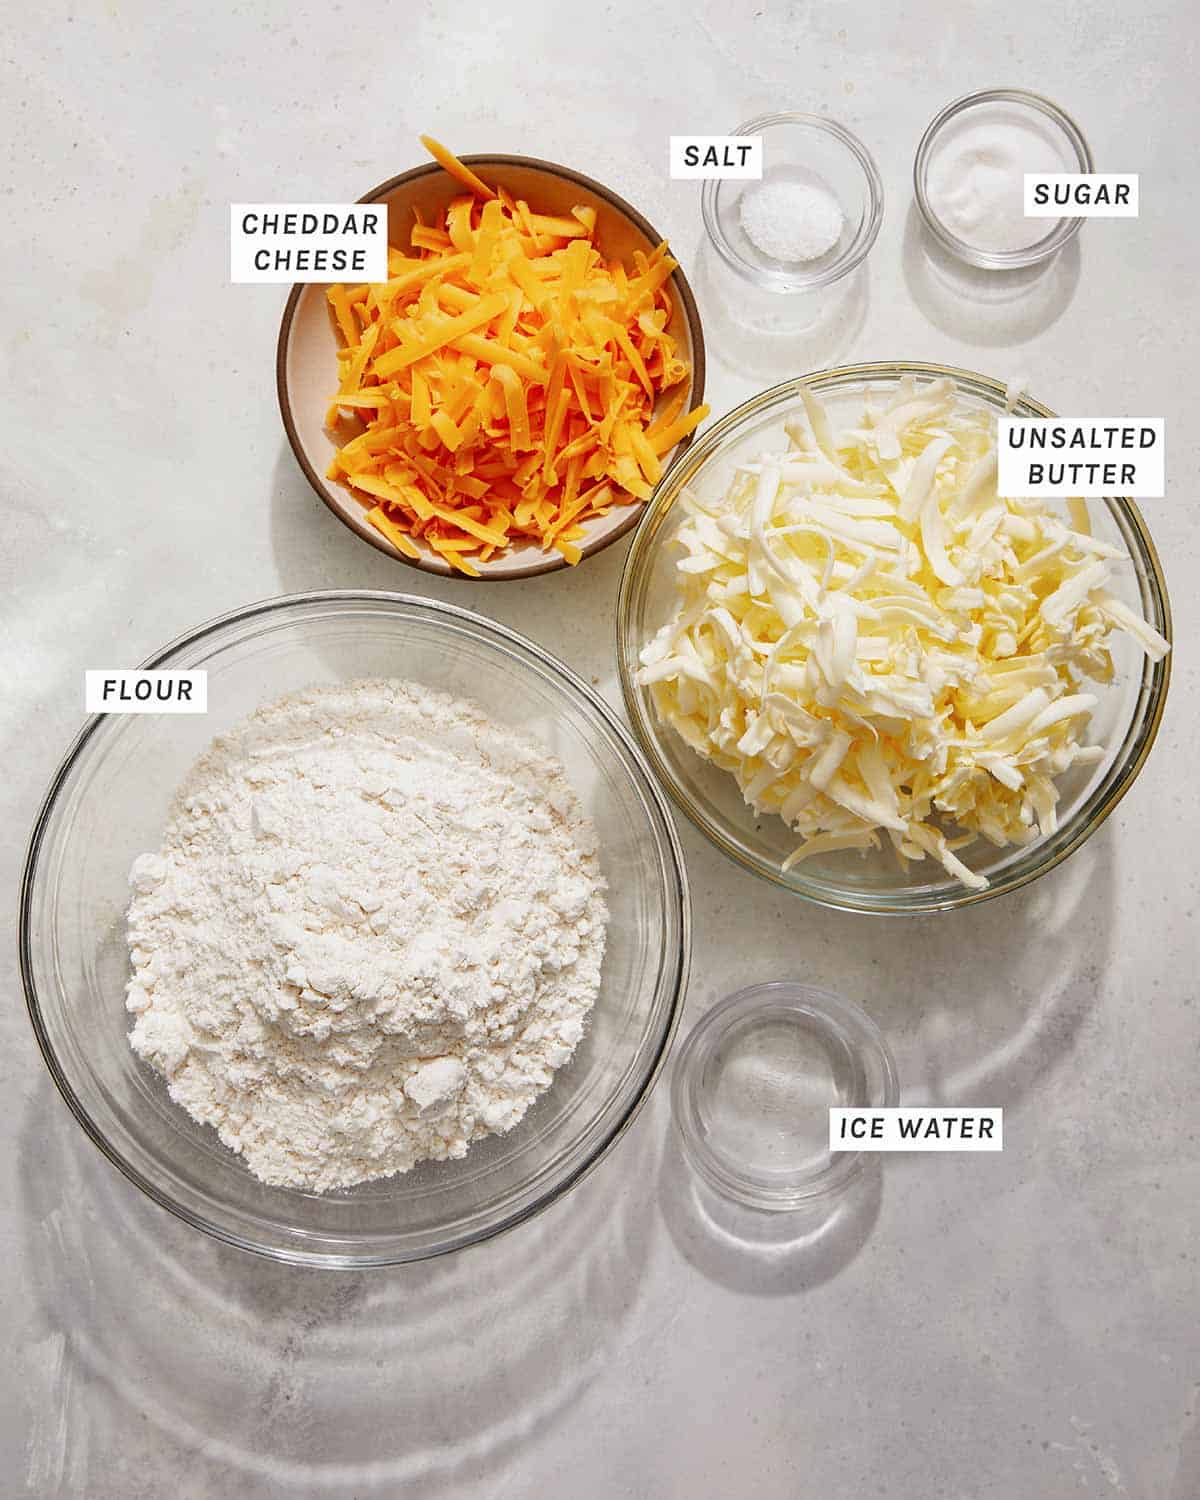 Ingredients for a cheddar crust. 